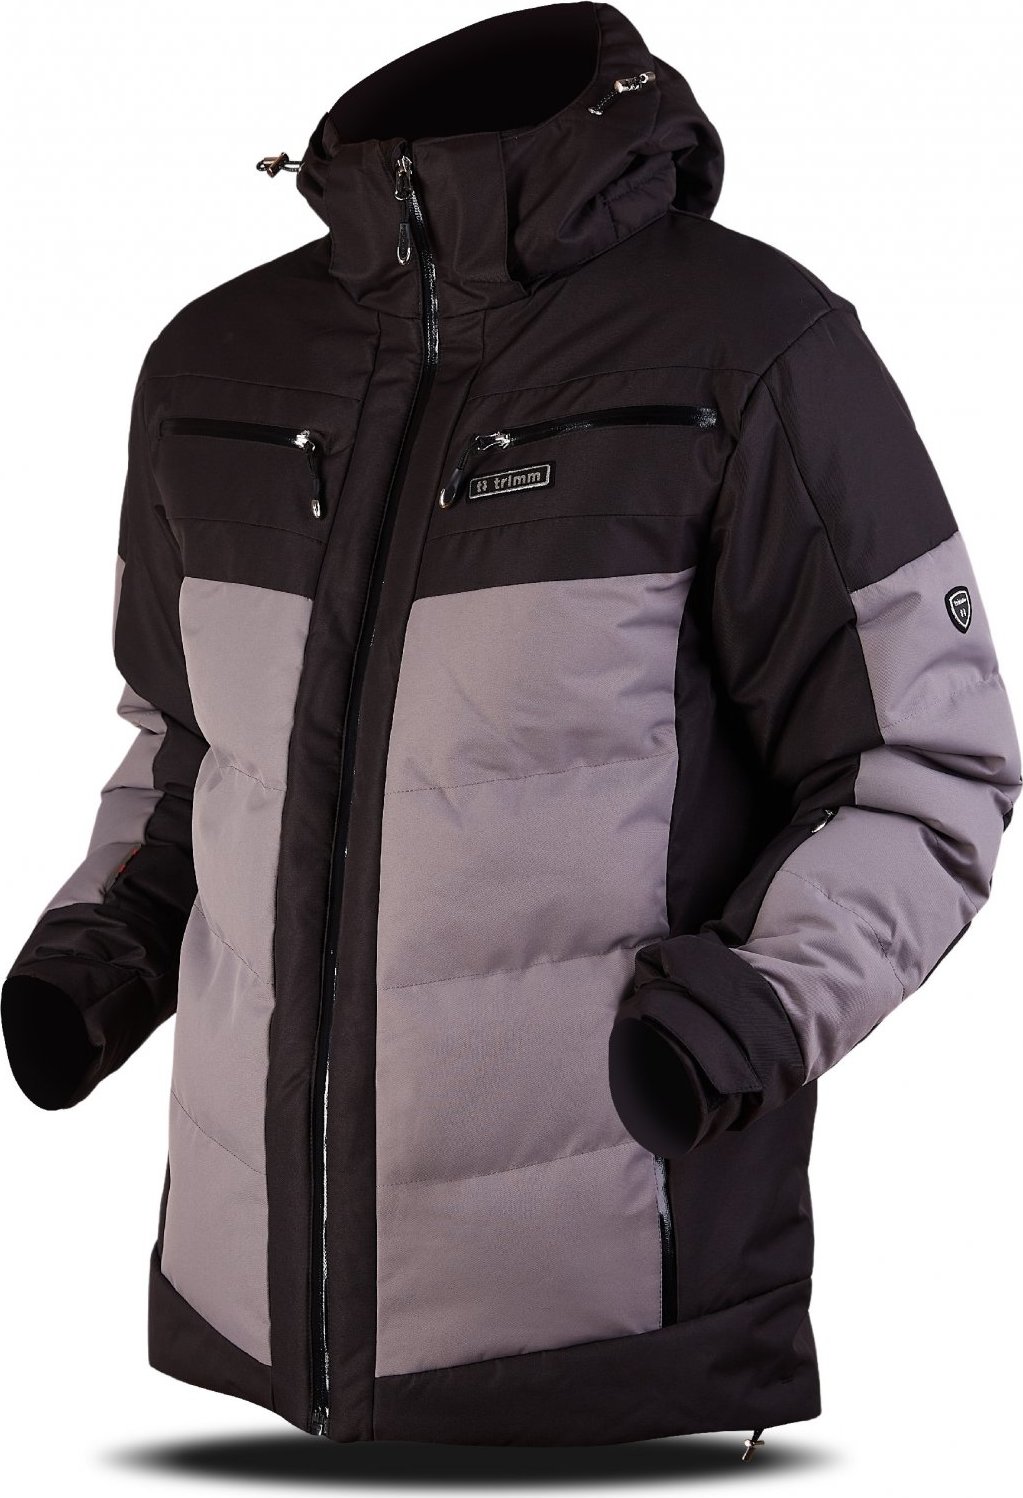 Pánská lyžařská bunda TRIMM Vario šedá/černá Velikost: M, Barva: grey/ black